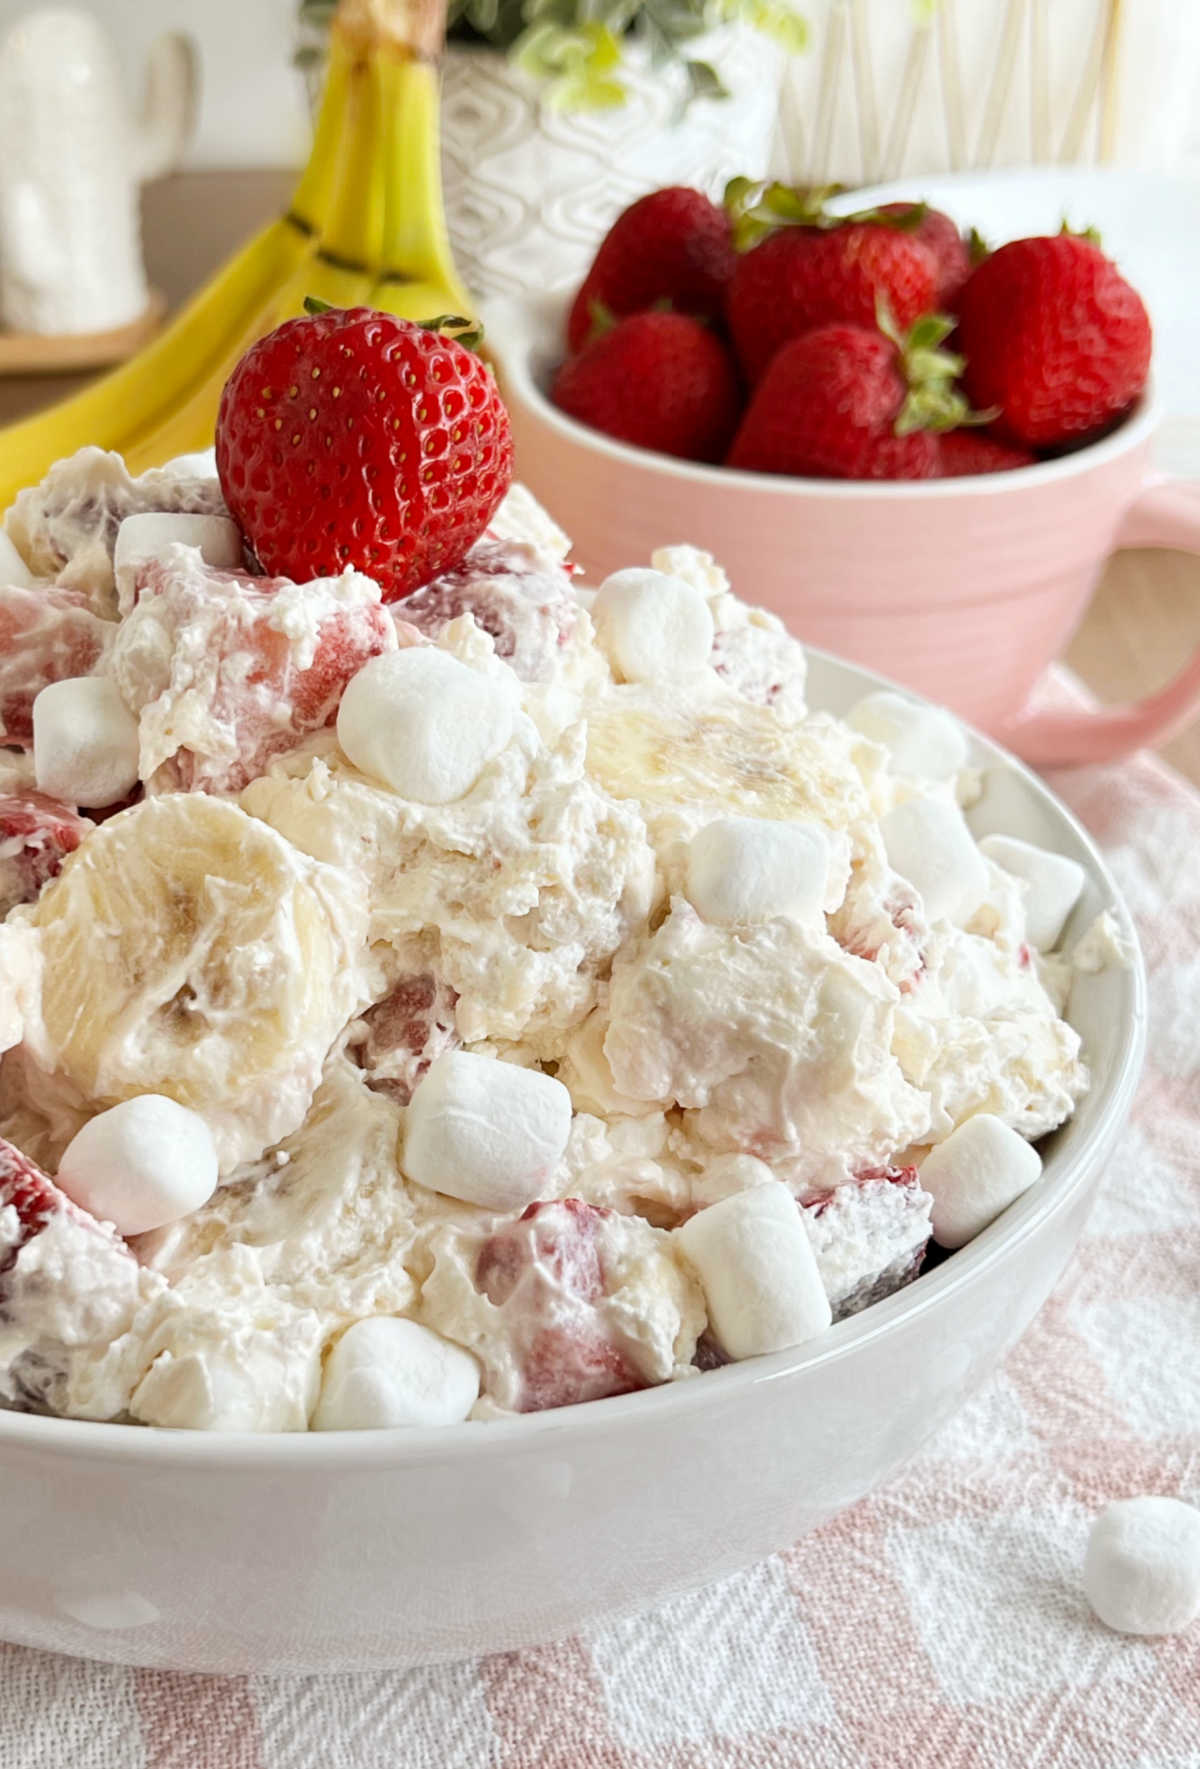 creamy strawberry banana cheesecake salad in white bowl on talbe